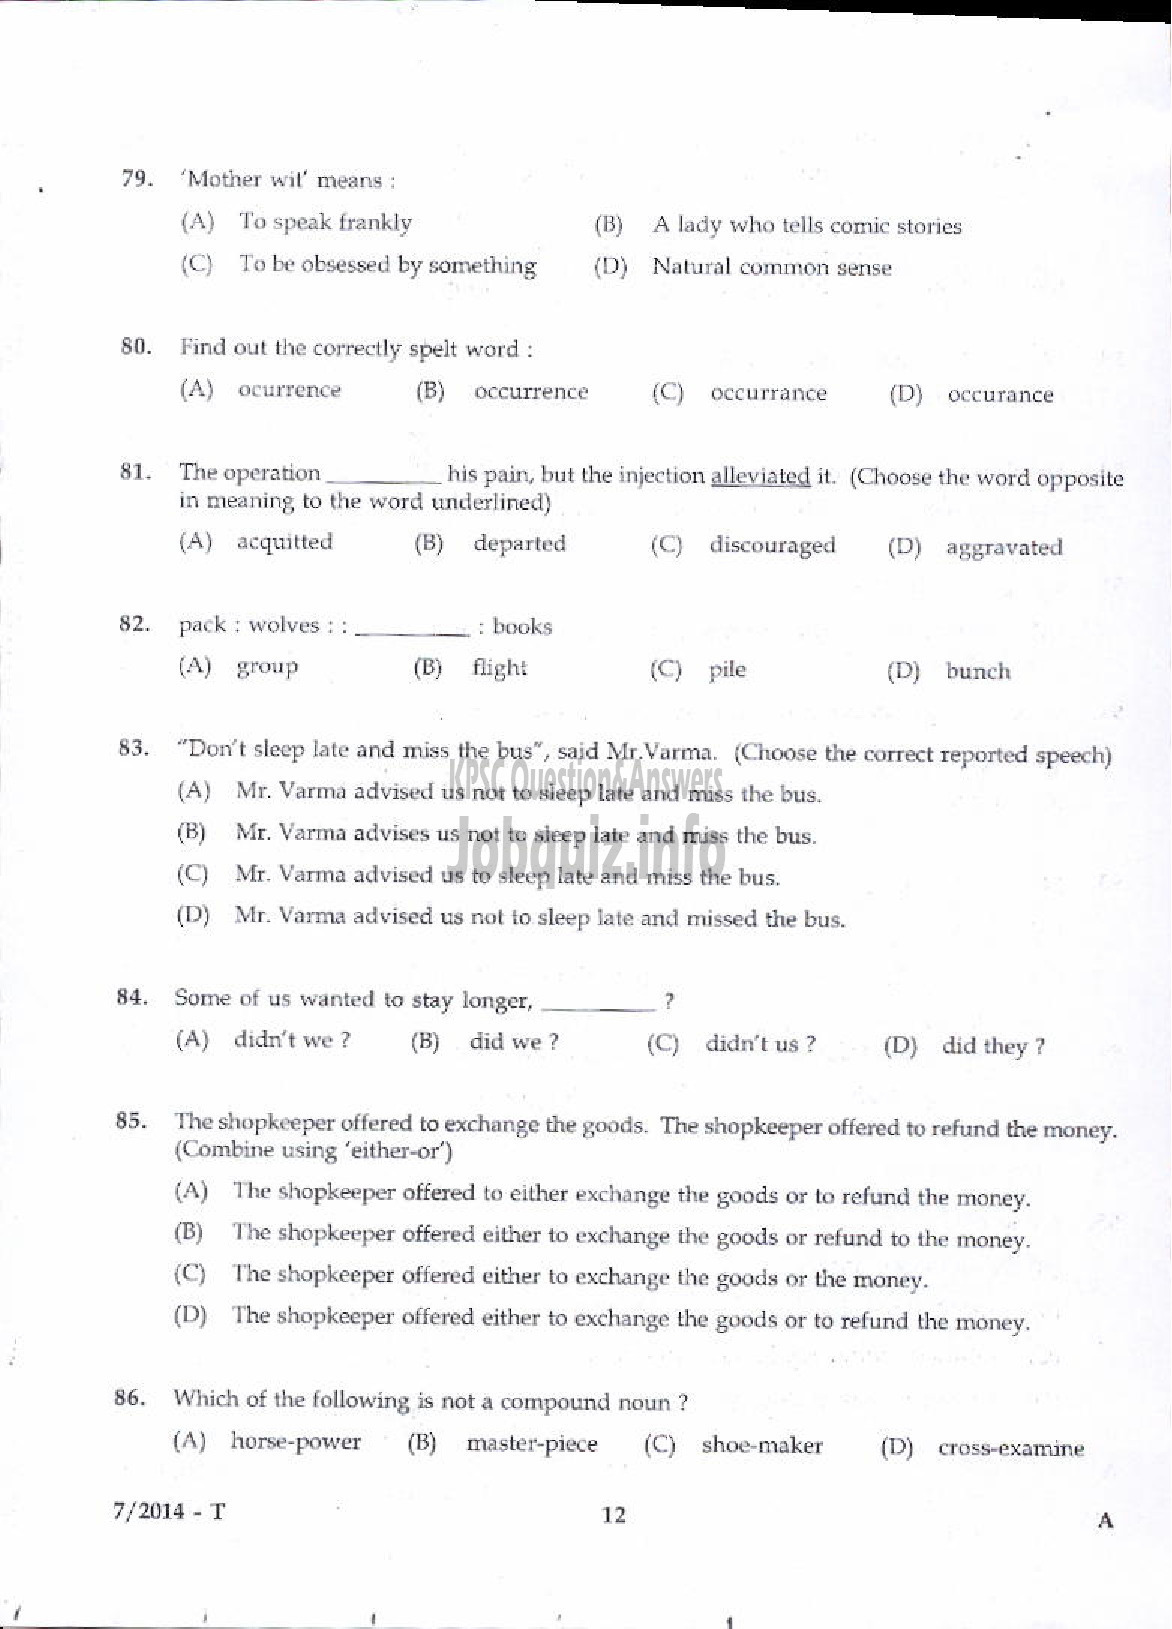 Kerala PSC Question Paper - LDC VARIOUS 2014 KOZHIKODE ( Tamil )-10